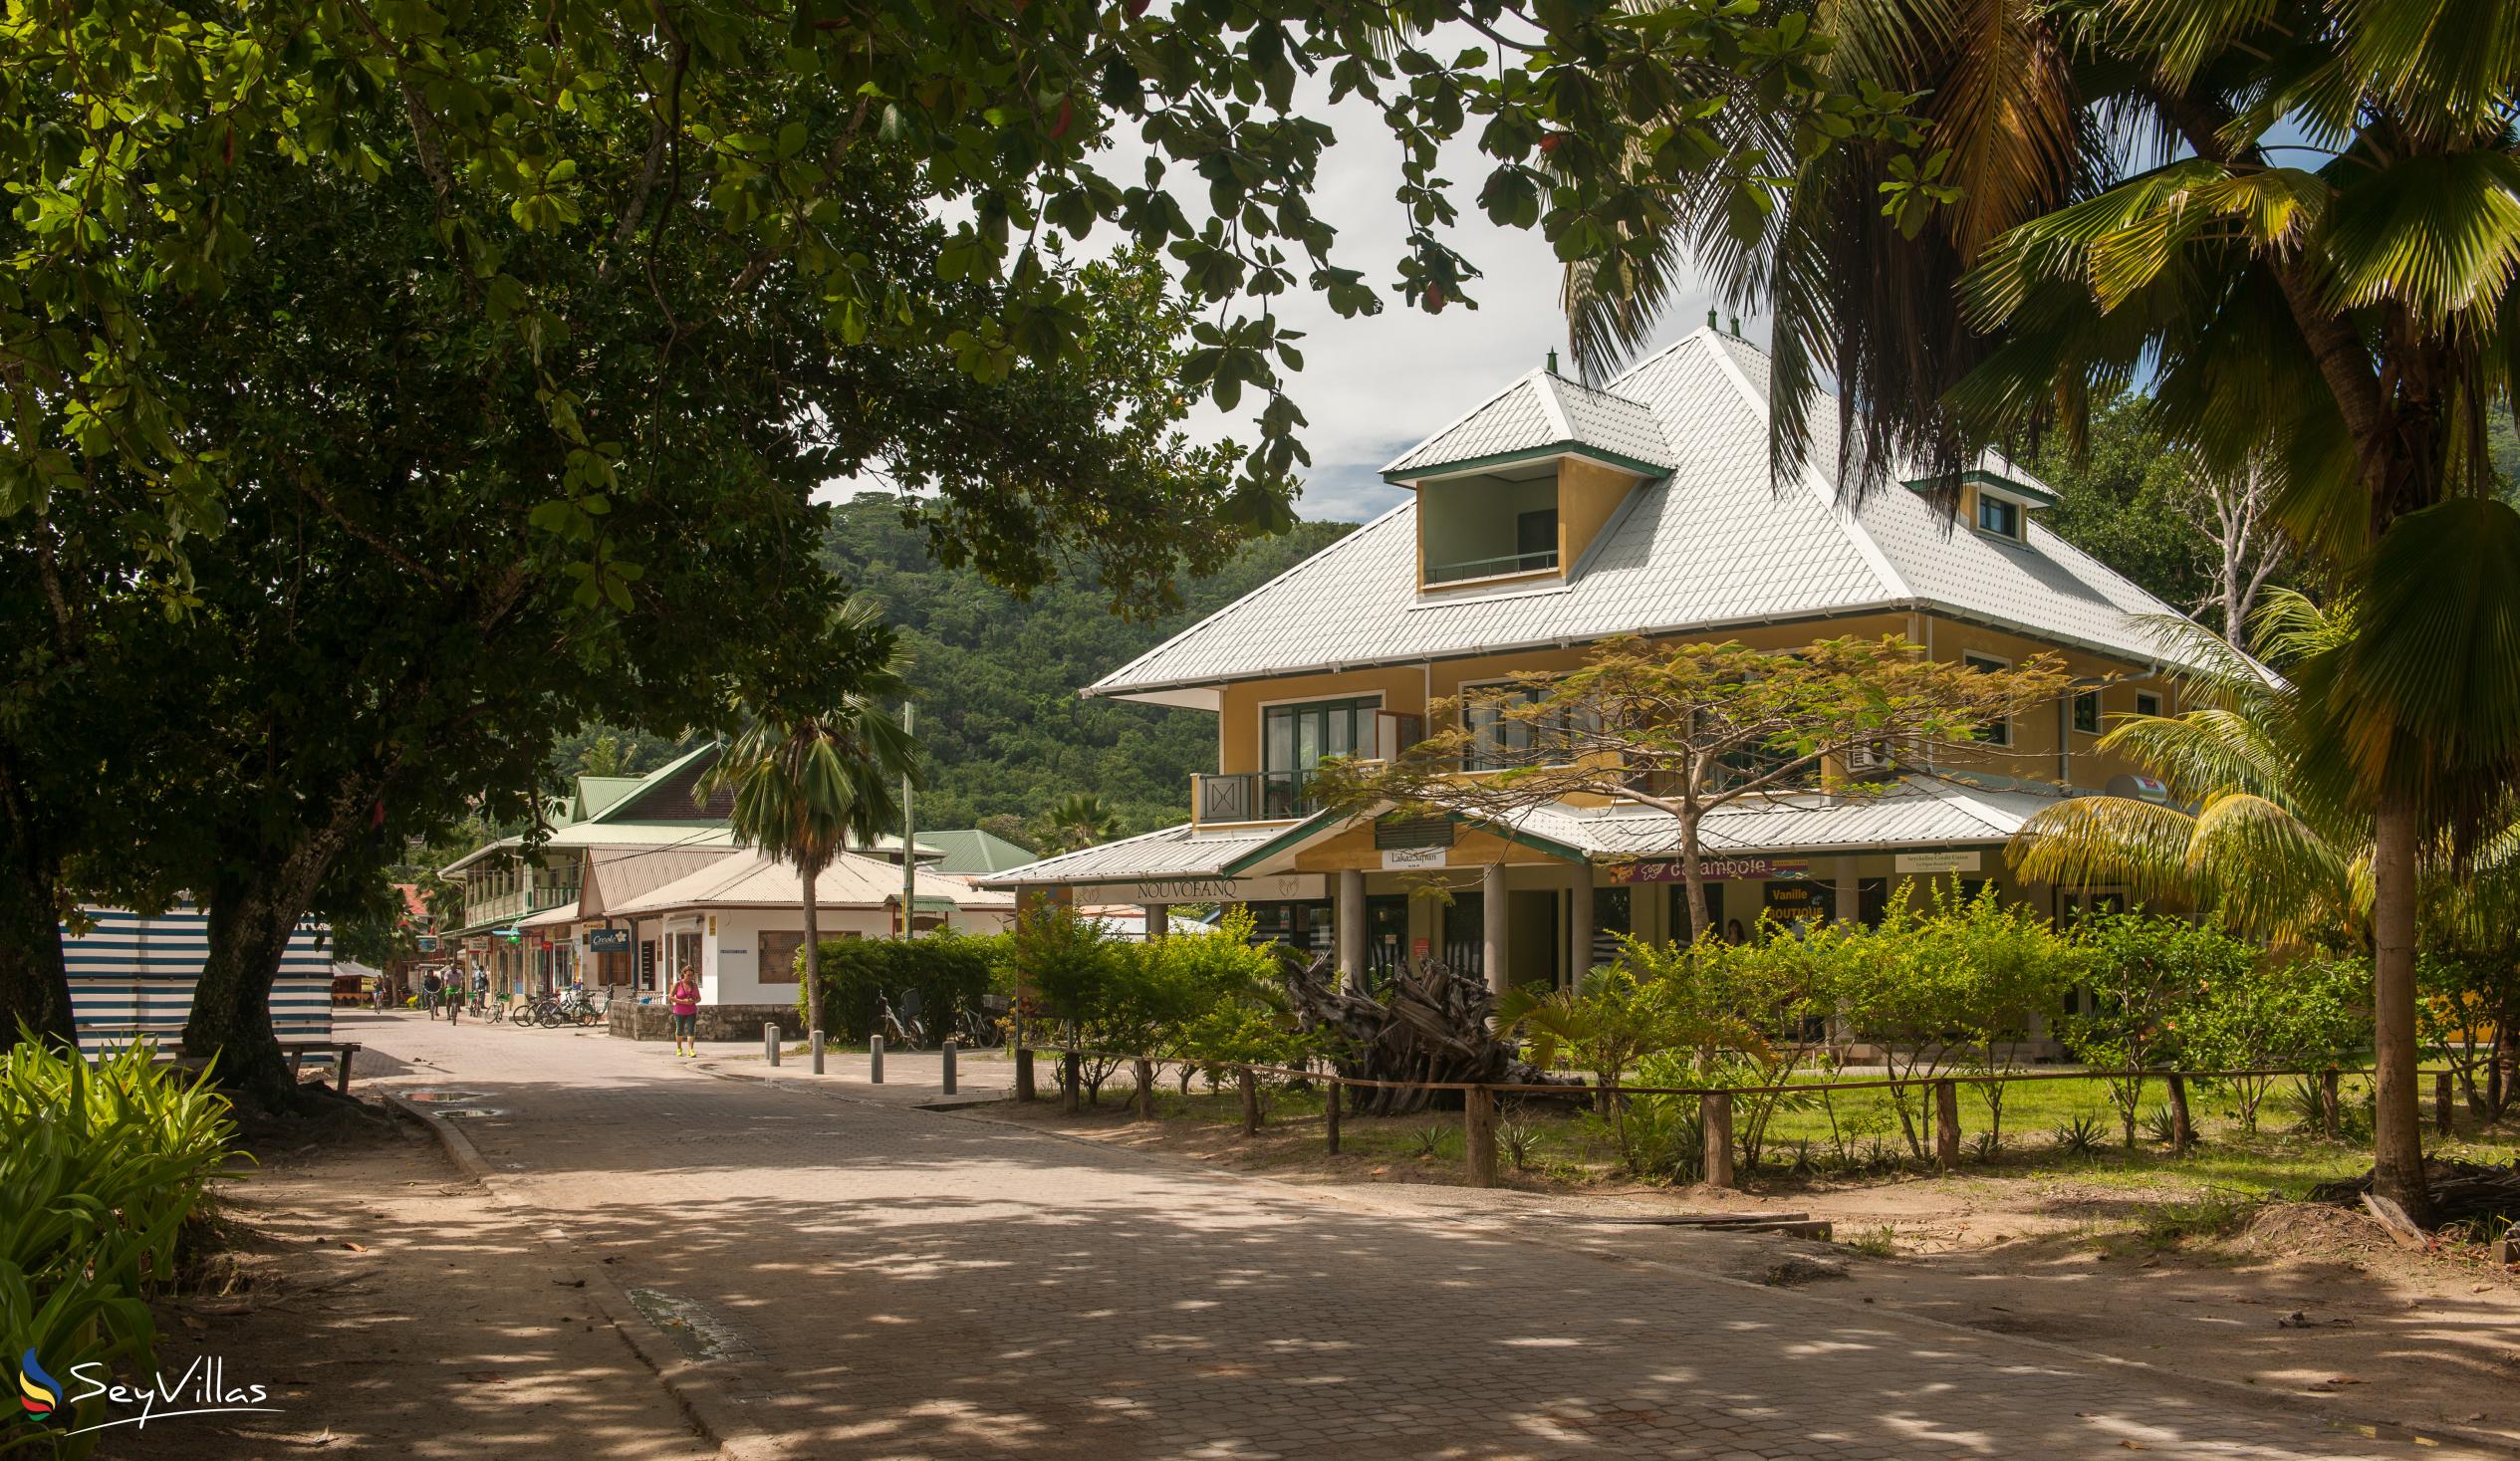 Photo 4: La Kaz Safran - Outdoor area - La Digue (Seychelles)